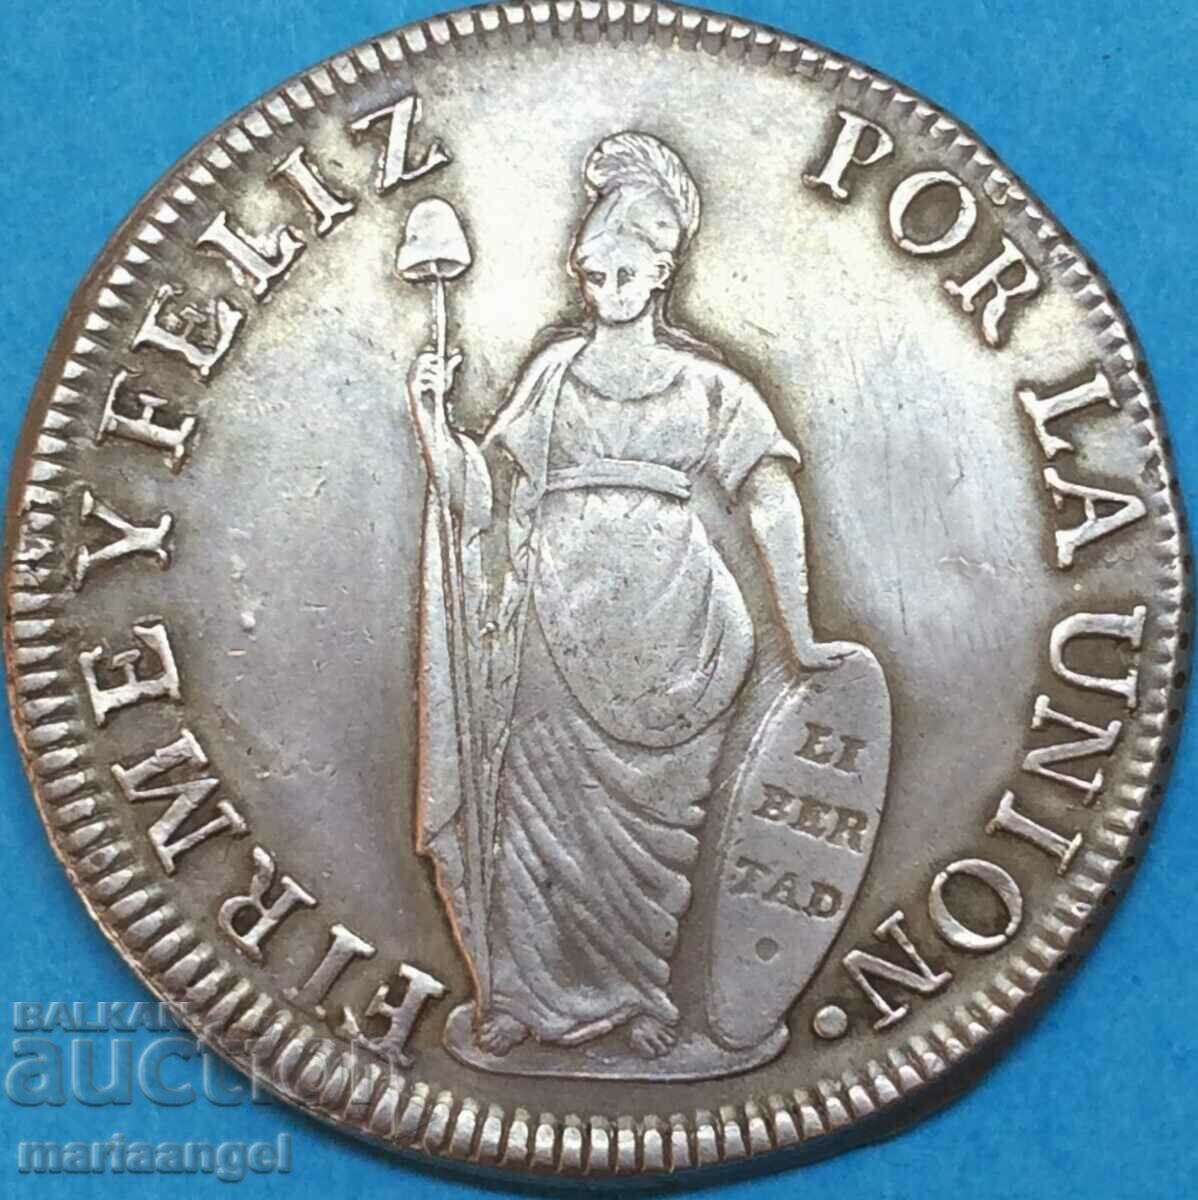 Peru 8 reales 1833 26.79g silver